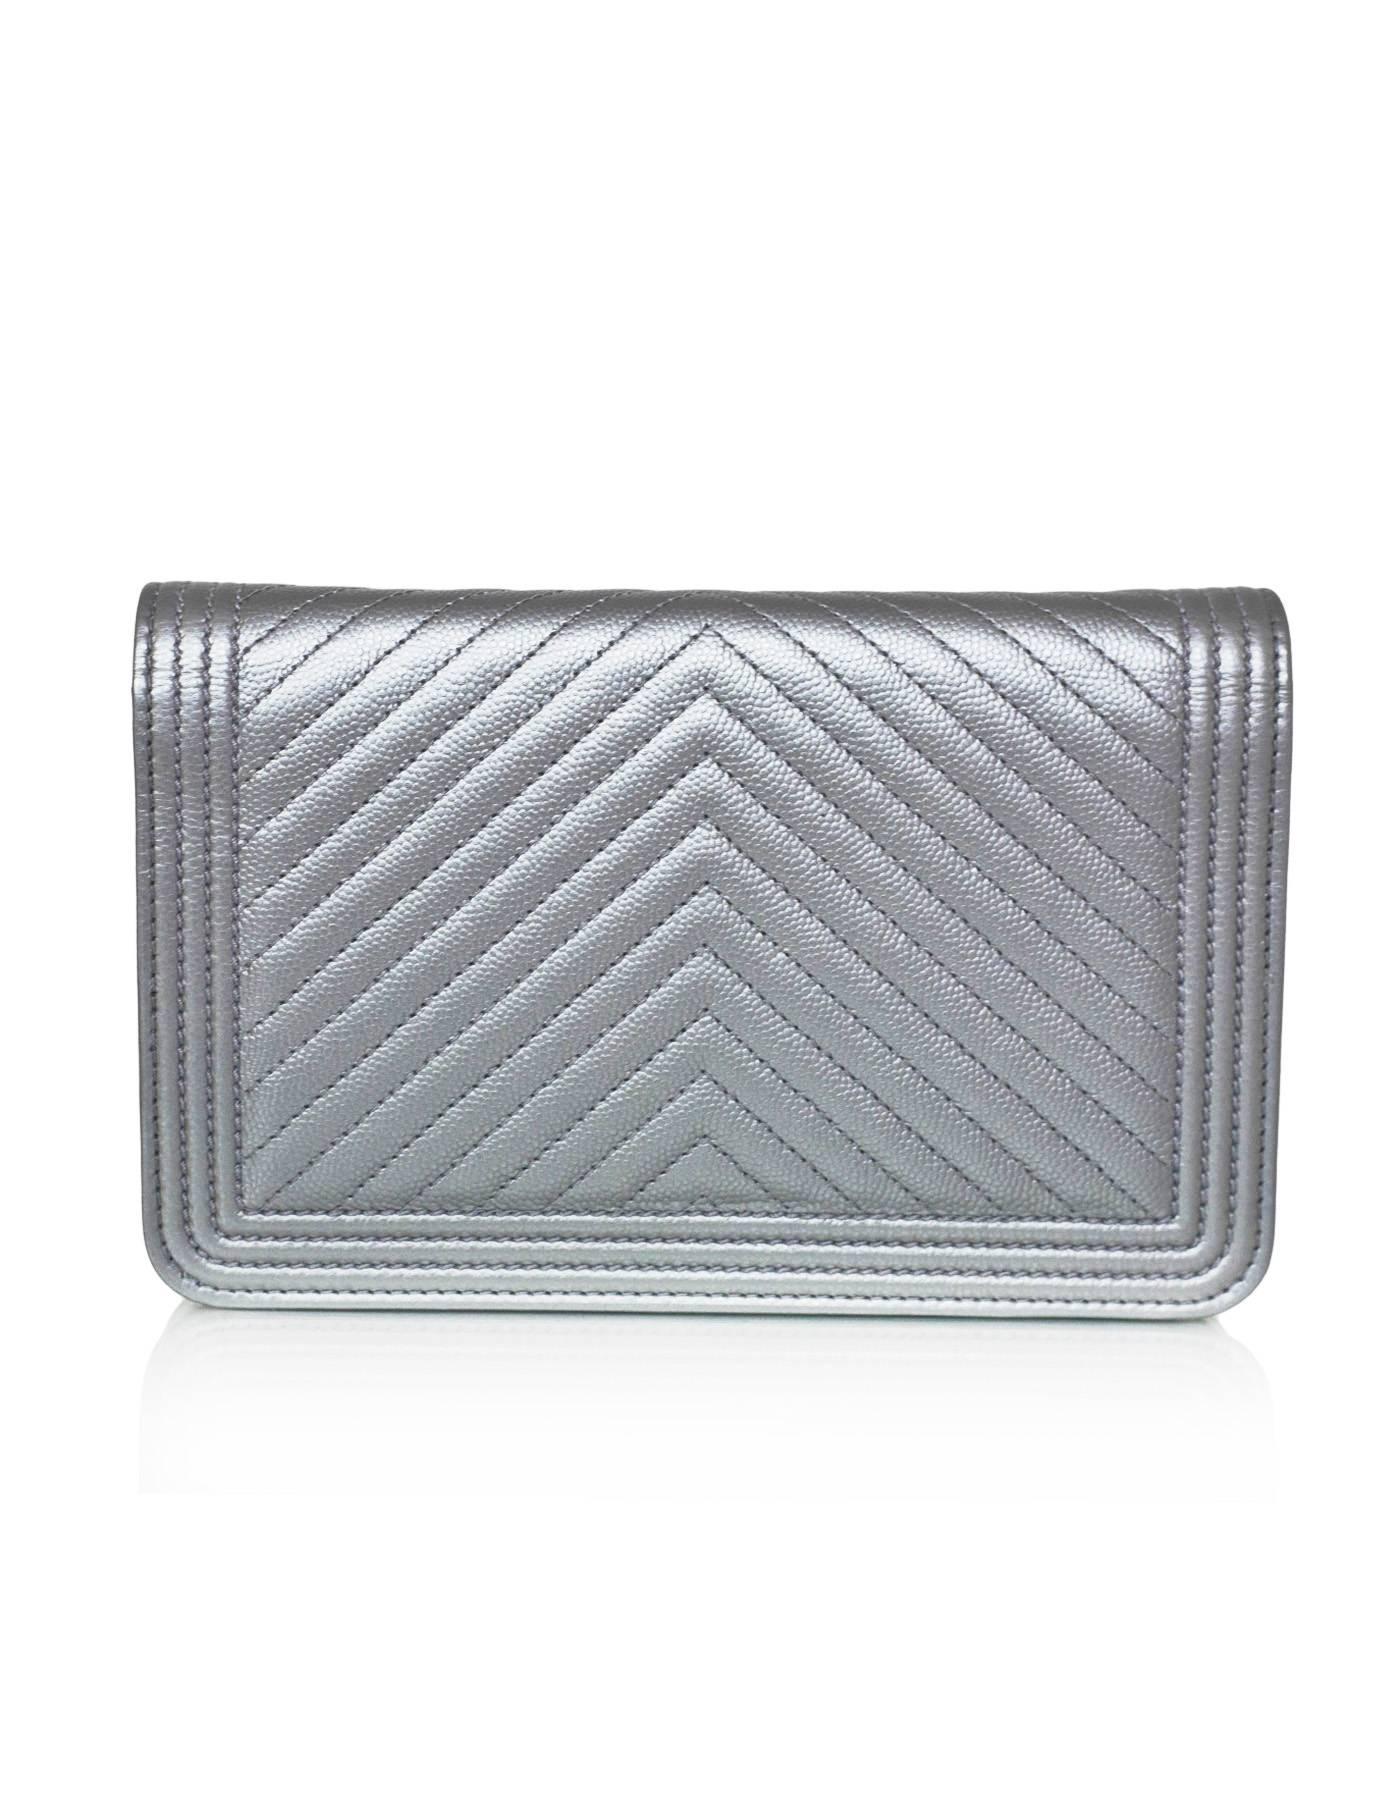 chanel silver wallet